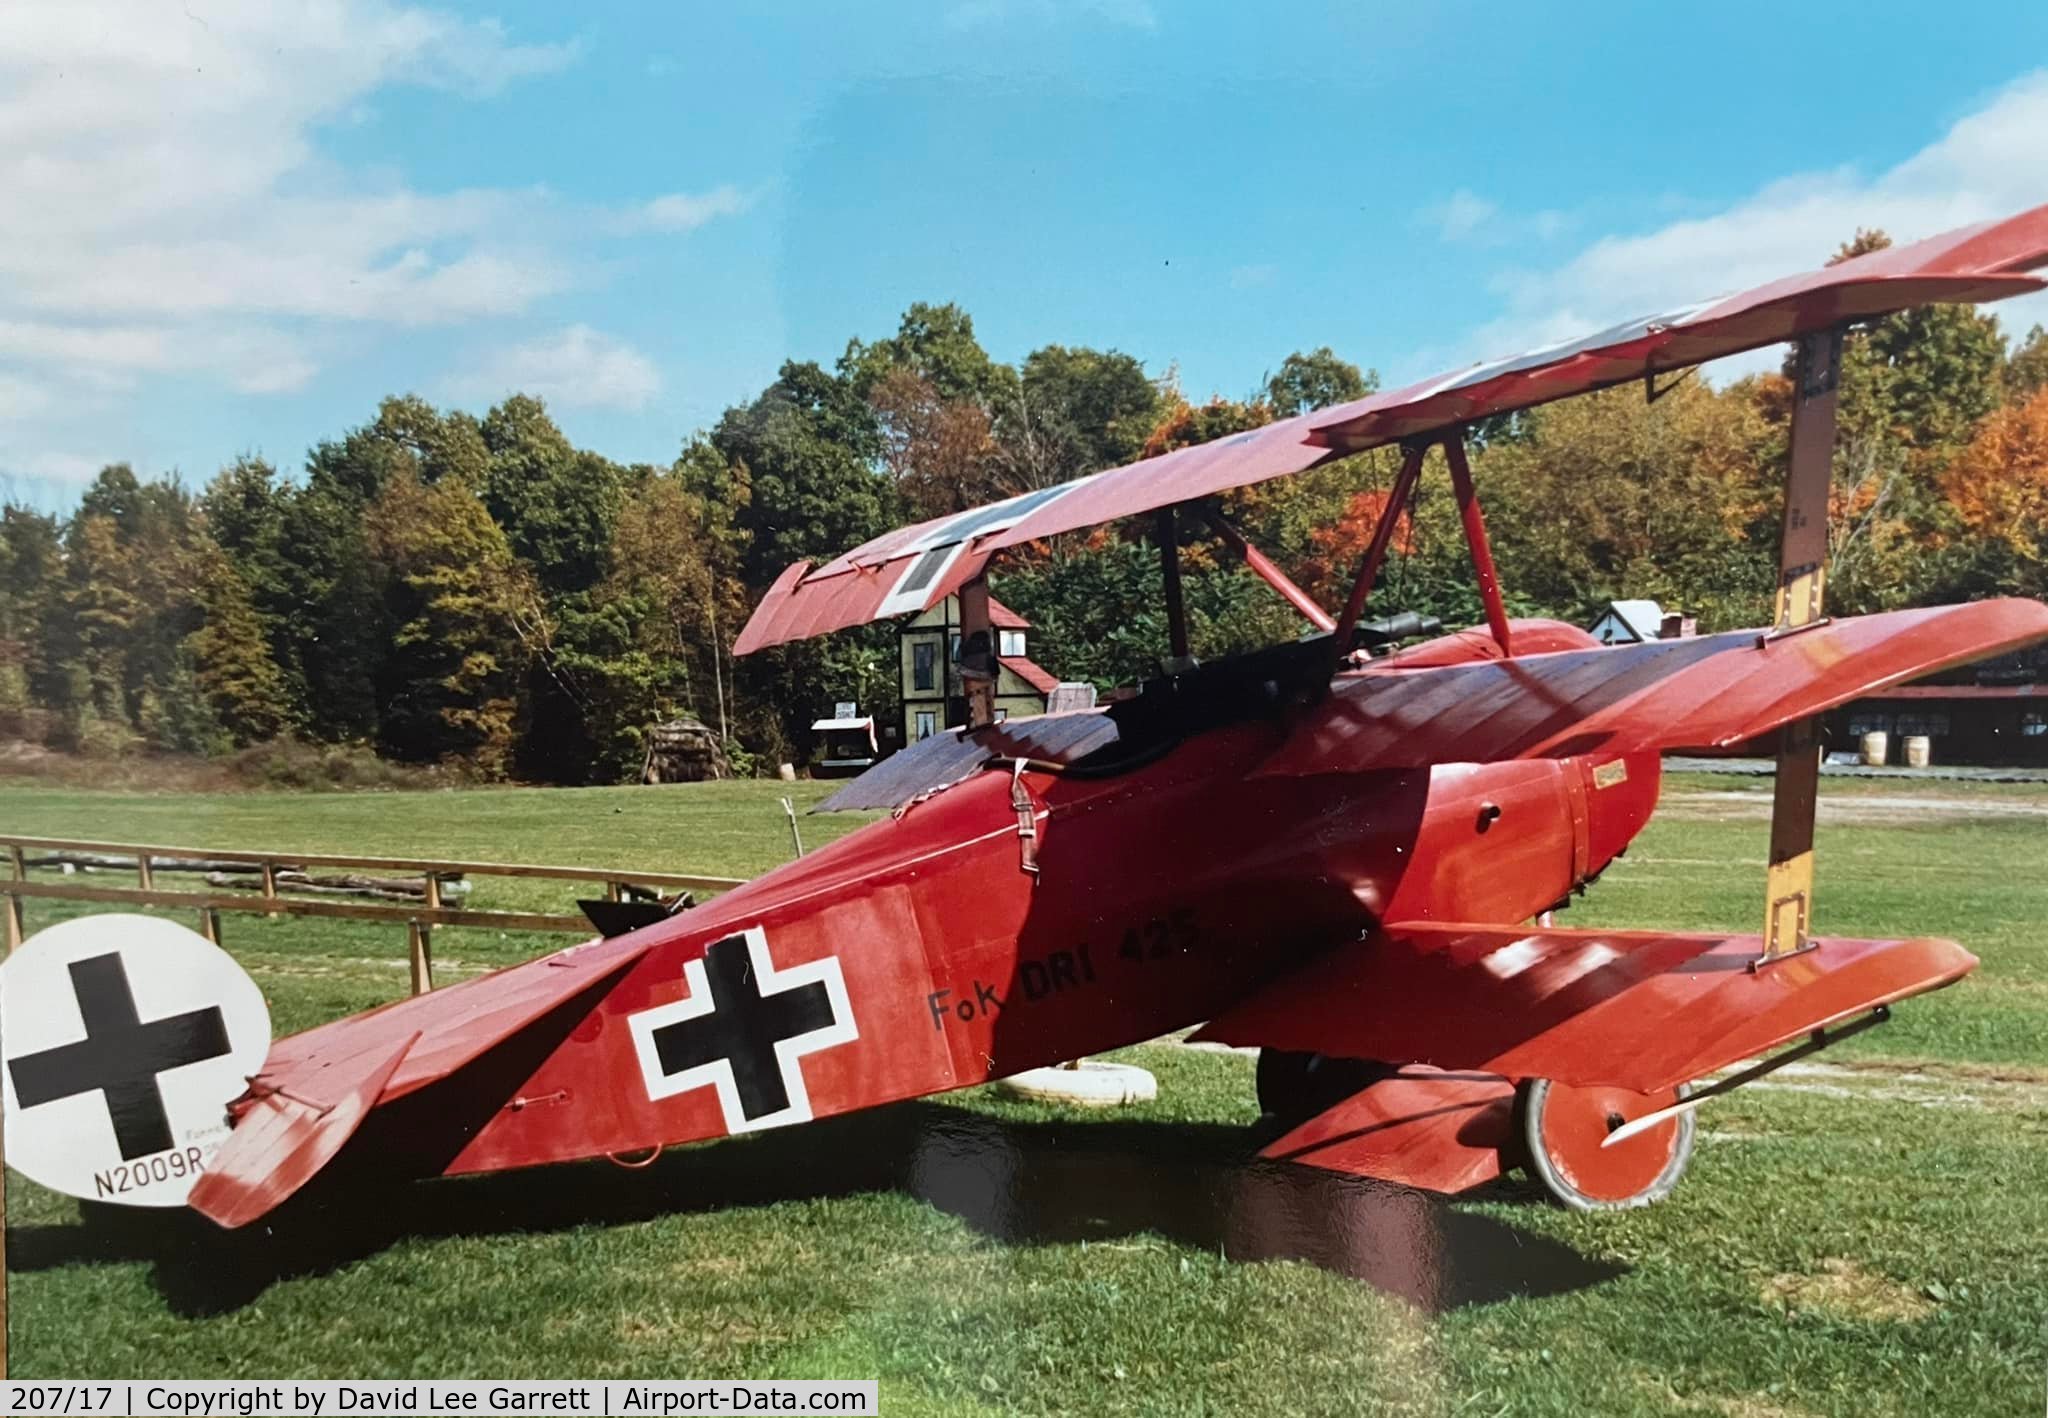 207/17, Fokker Dr.1 Triplane Replica C/N Not found 207/17, Fokker DRI @ Old Rhinebeck Aerodrome